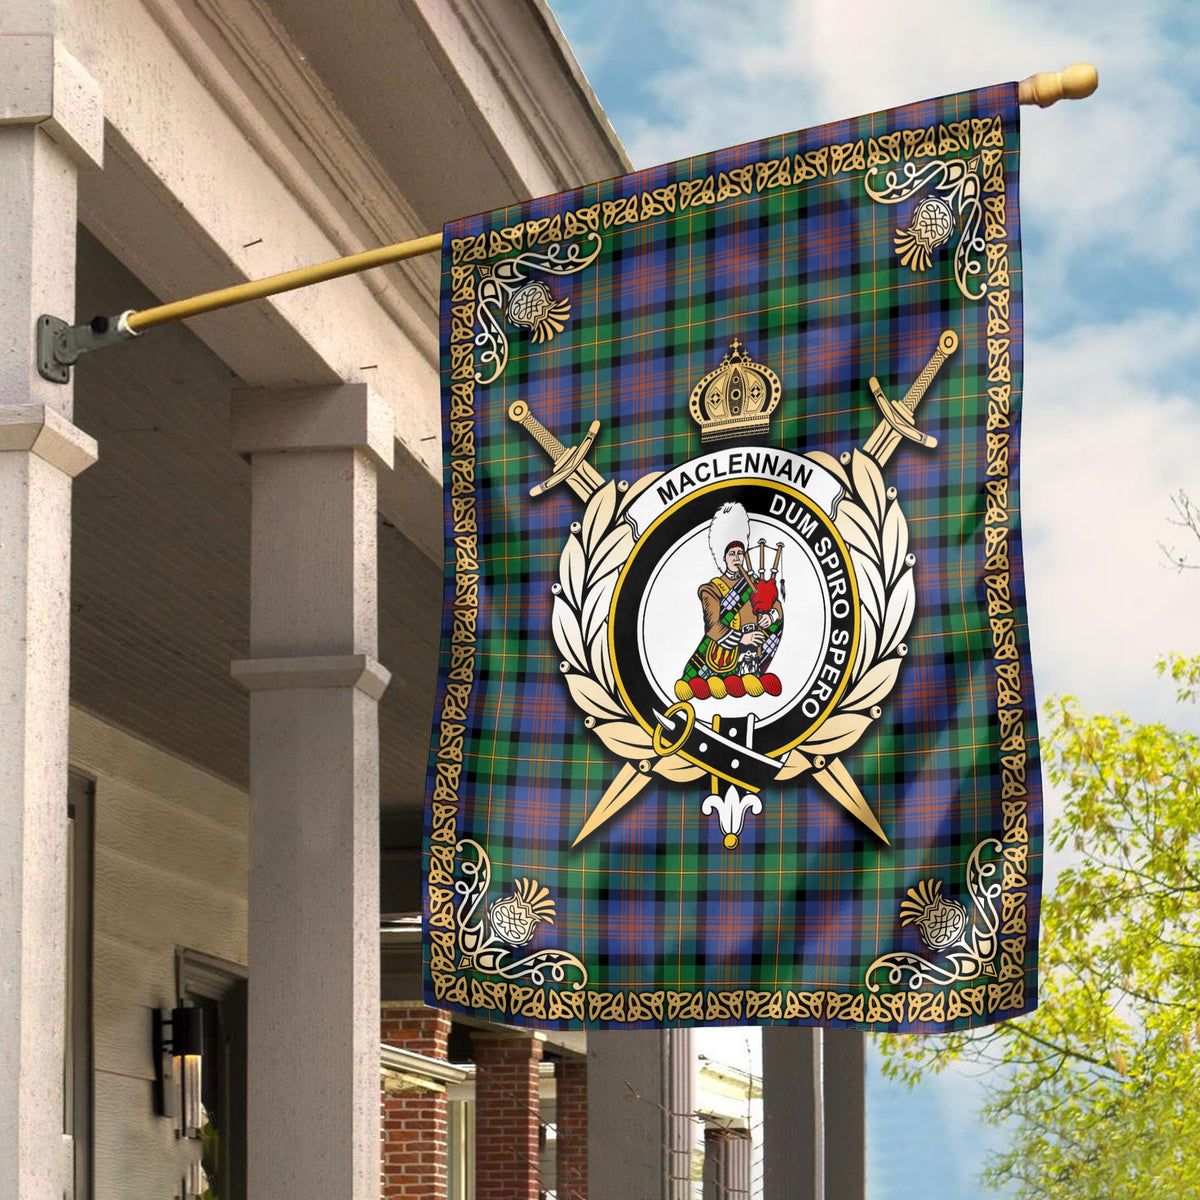 MacLennan Ancient Tartan Crest Garden Flag - Celtic Thistle Style